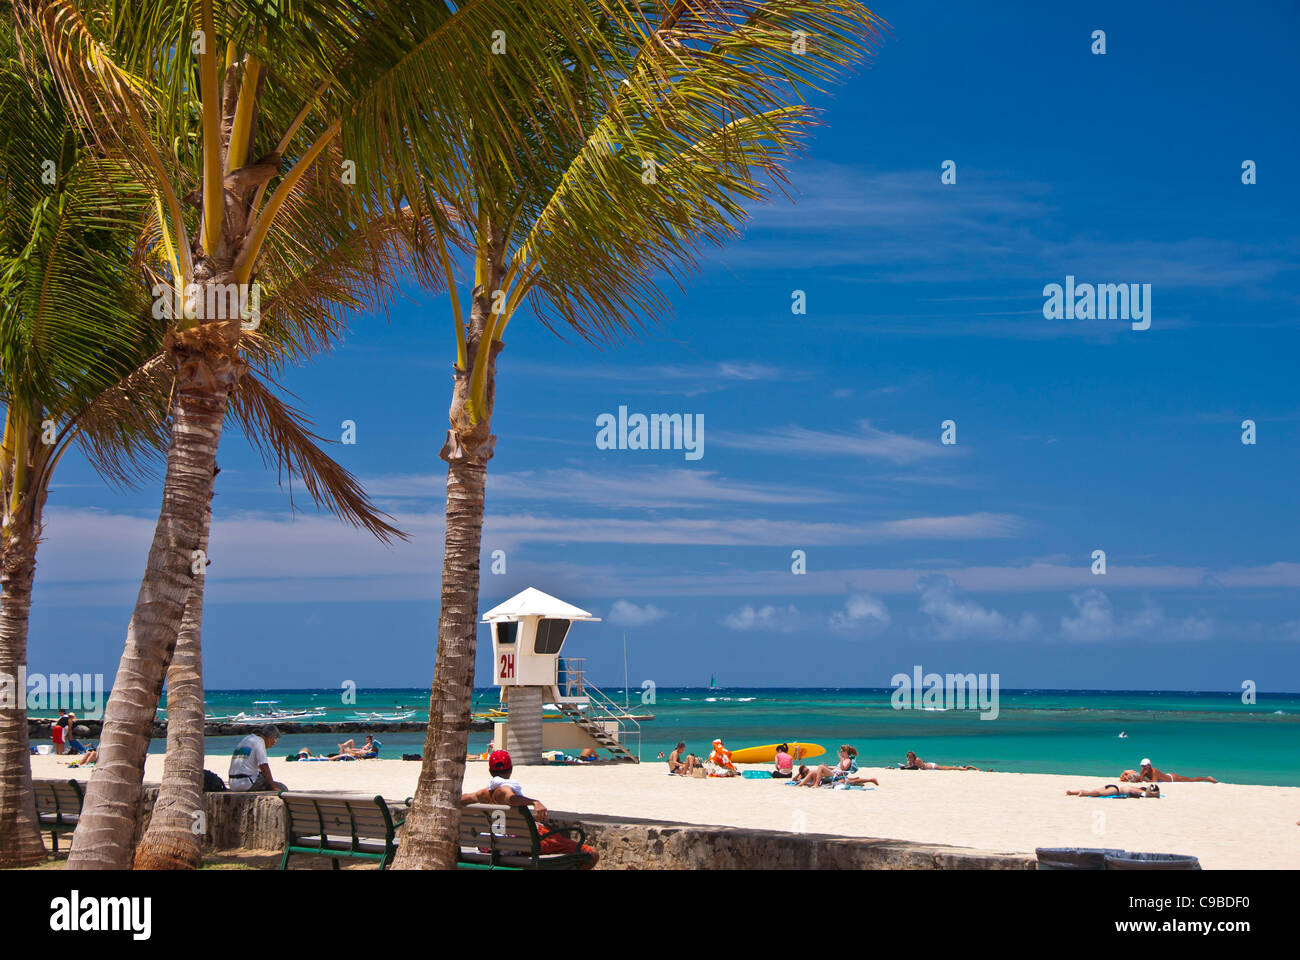 Waikiki Beach, Hawaii lifeguard stand, sunbathers, palm trees Stock Photo